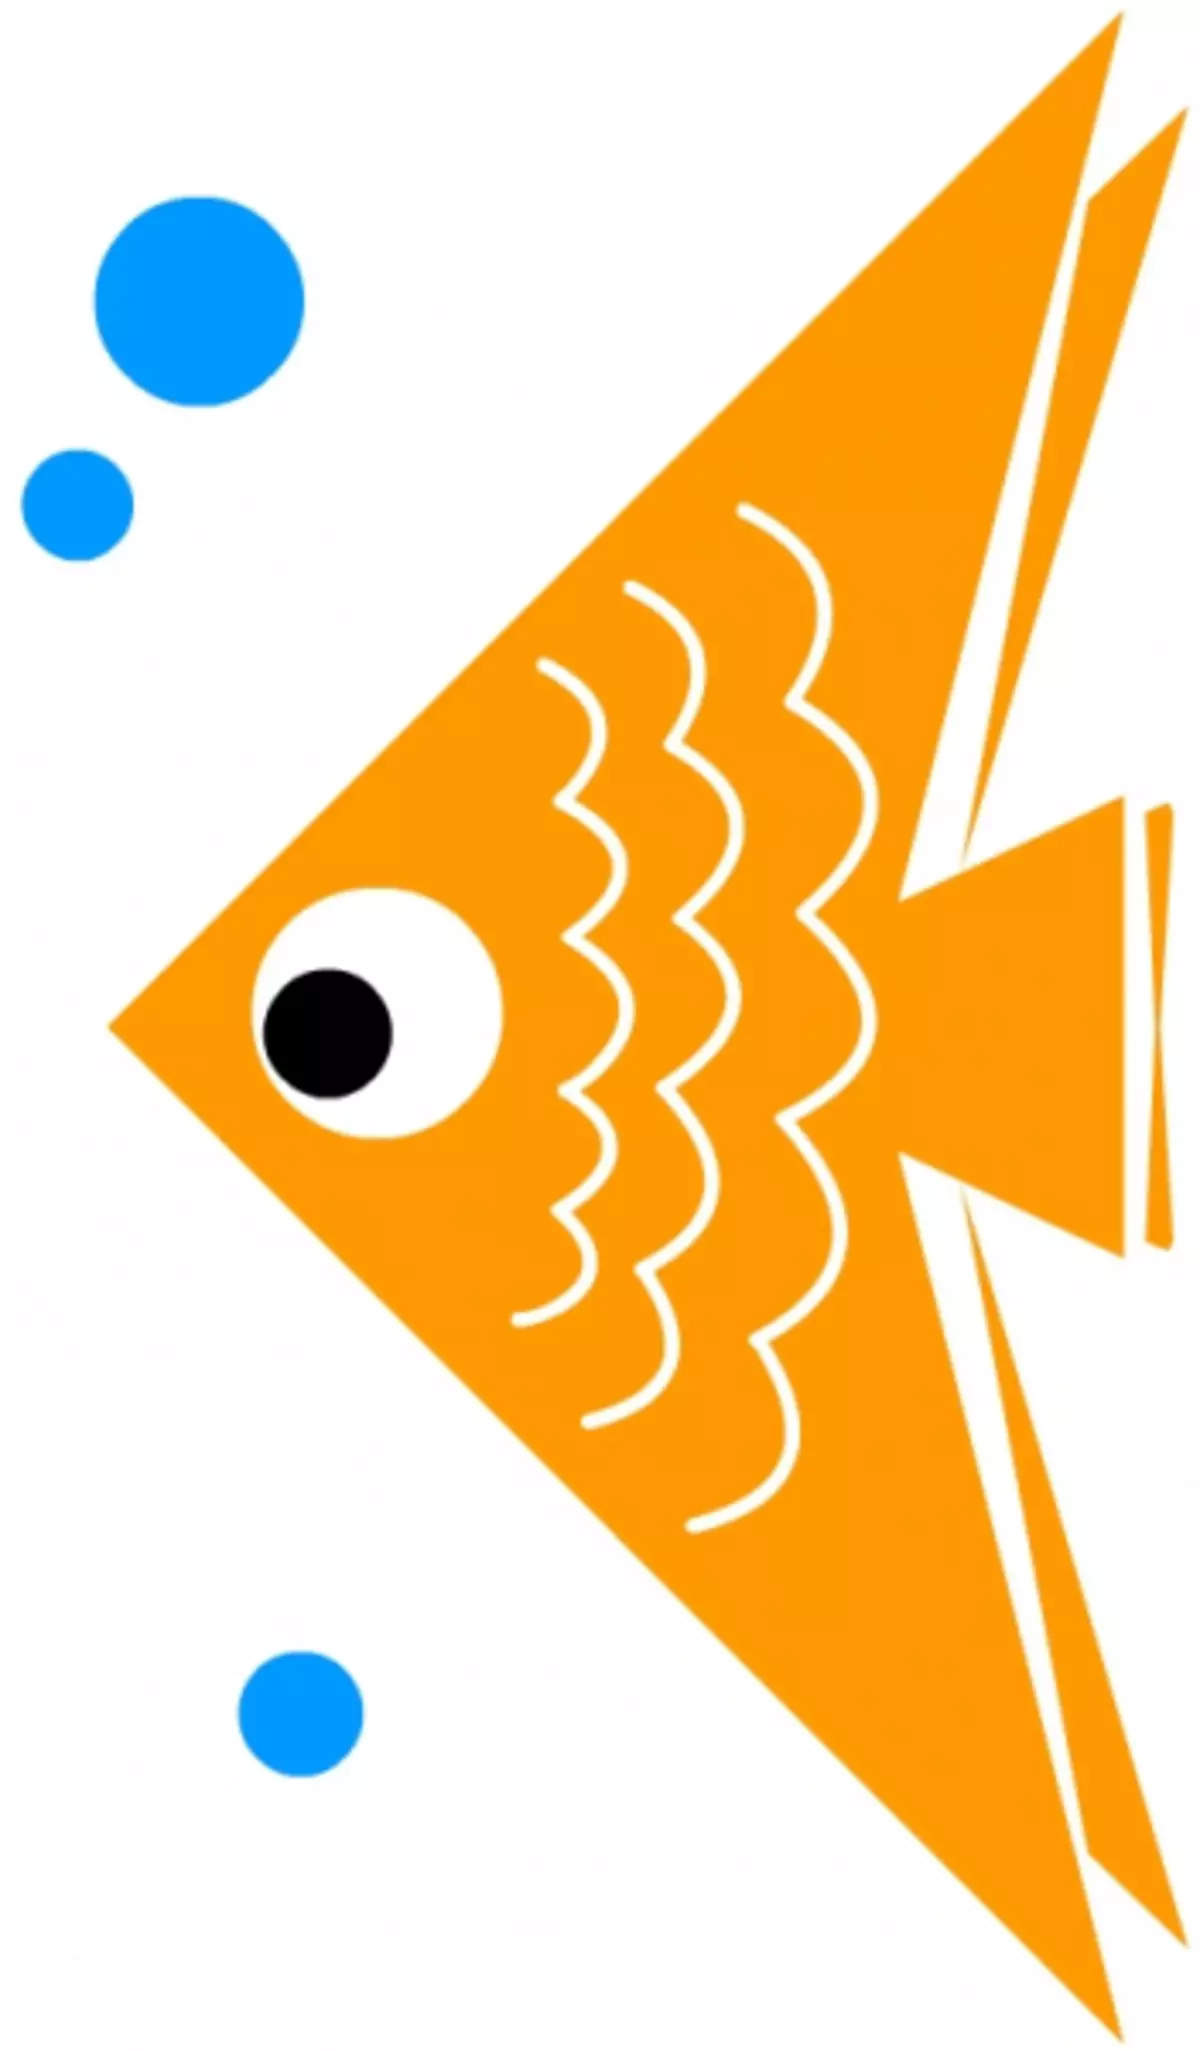 Origami: Fish երեխաների համար լուսանկար եւ տեսանյութ ունեցող երեխաների համար